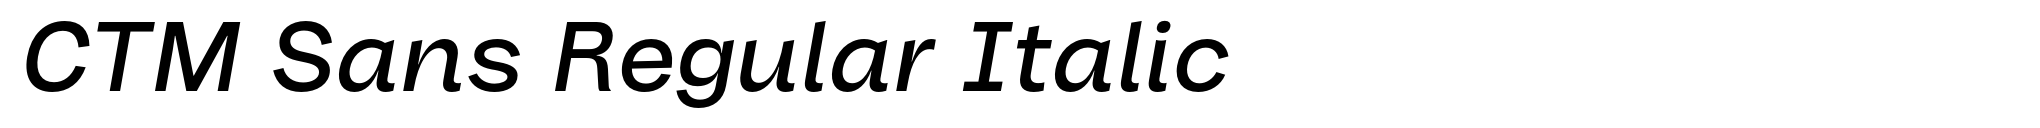 CTM Sans Regular Italic image